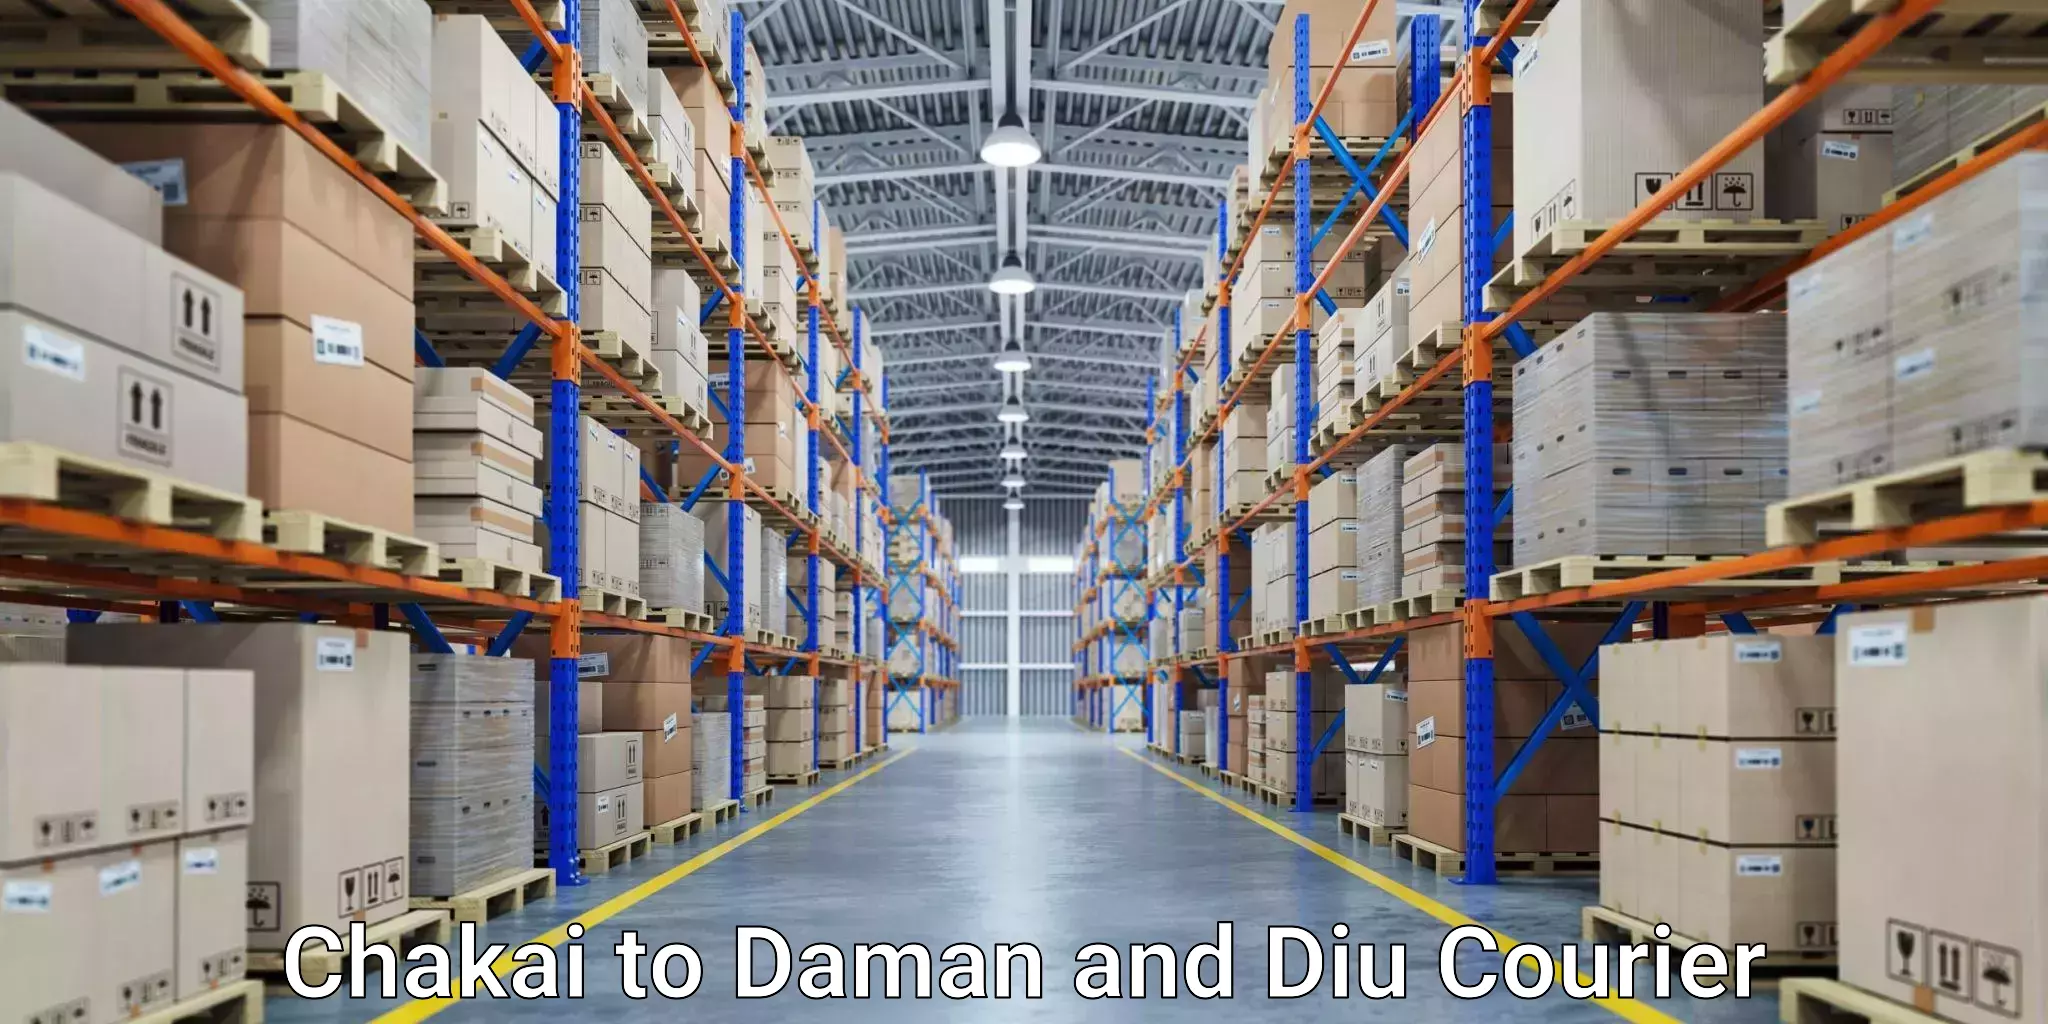 Courier service comparison Chakai to Daman and Diu